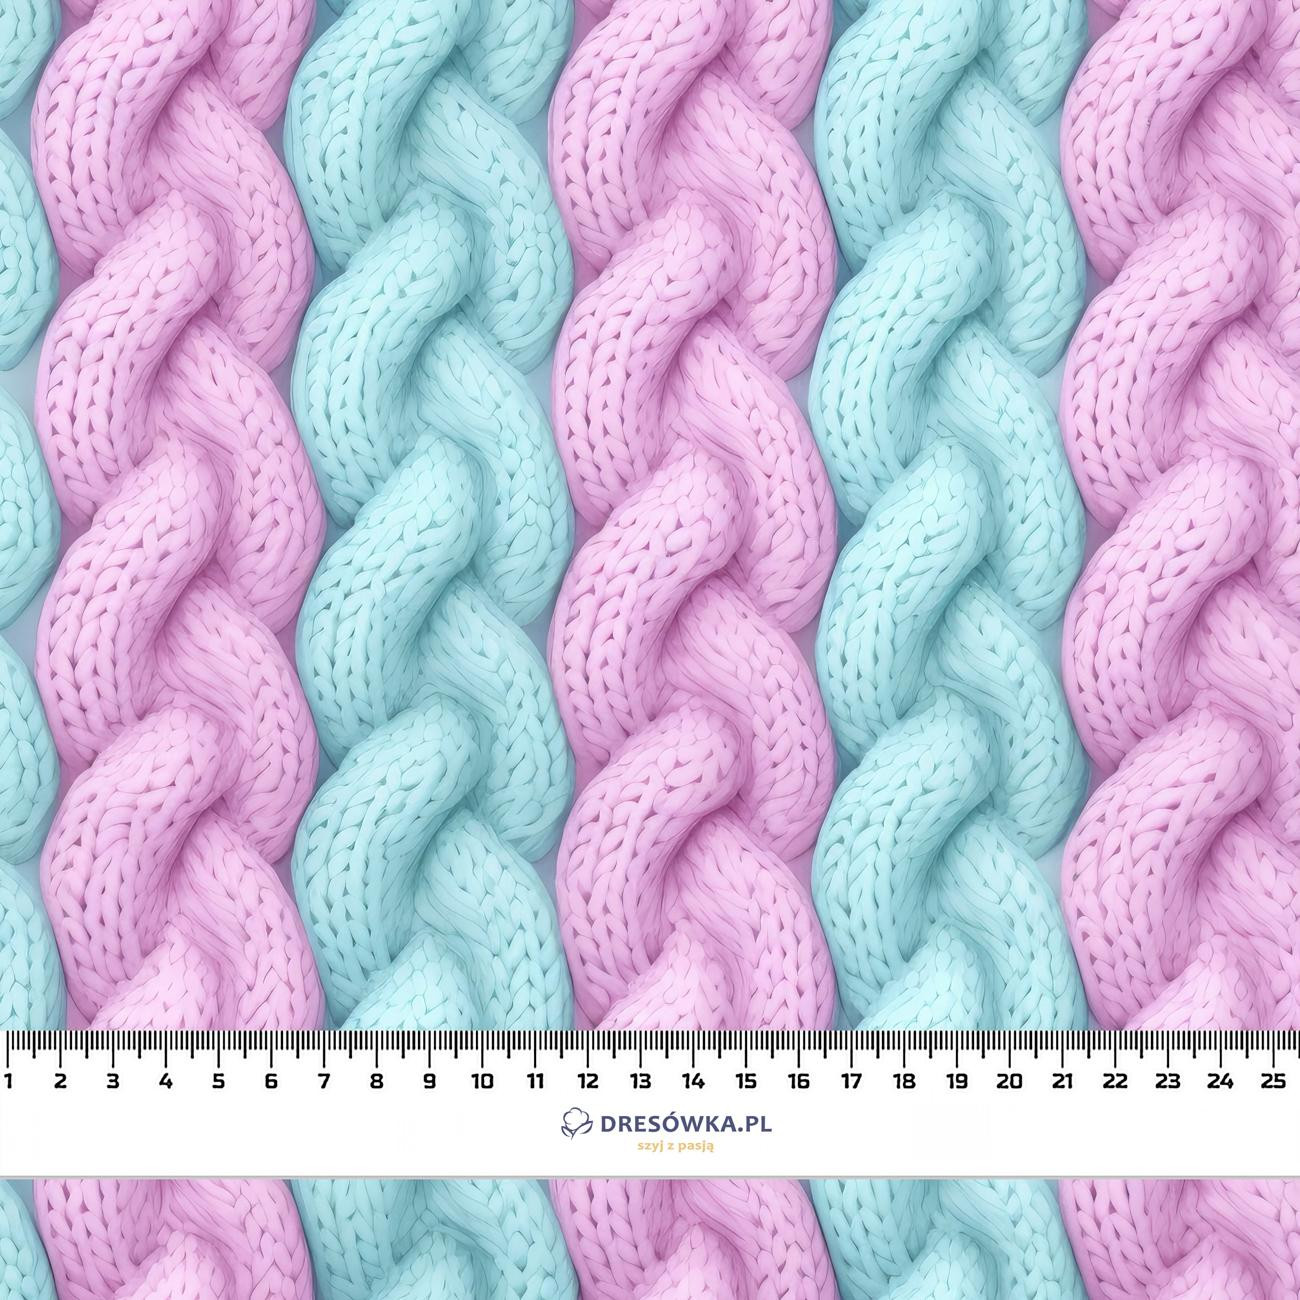 IMITATION PASTEL SWEATER PAT. 4 - brushed knitwear with elastane ITY